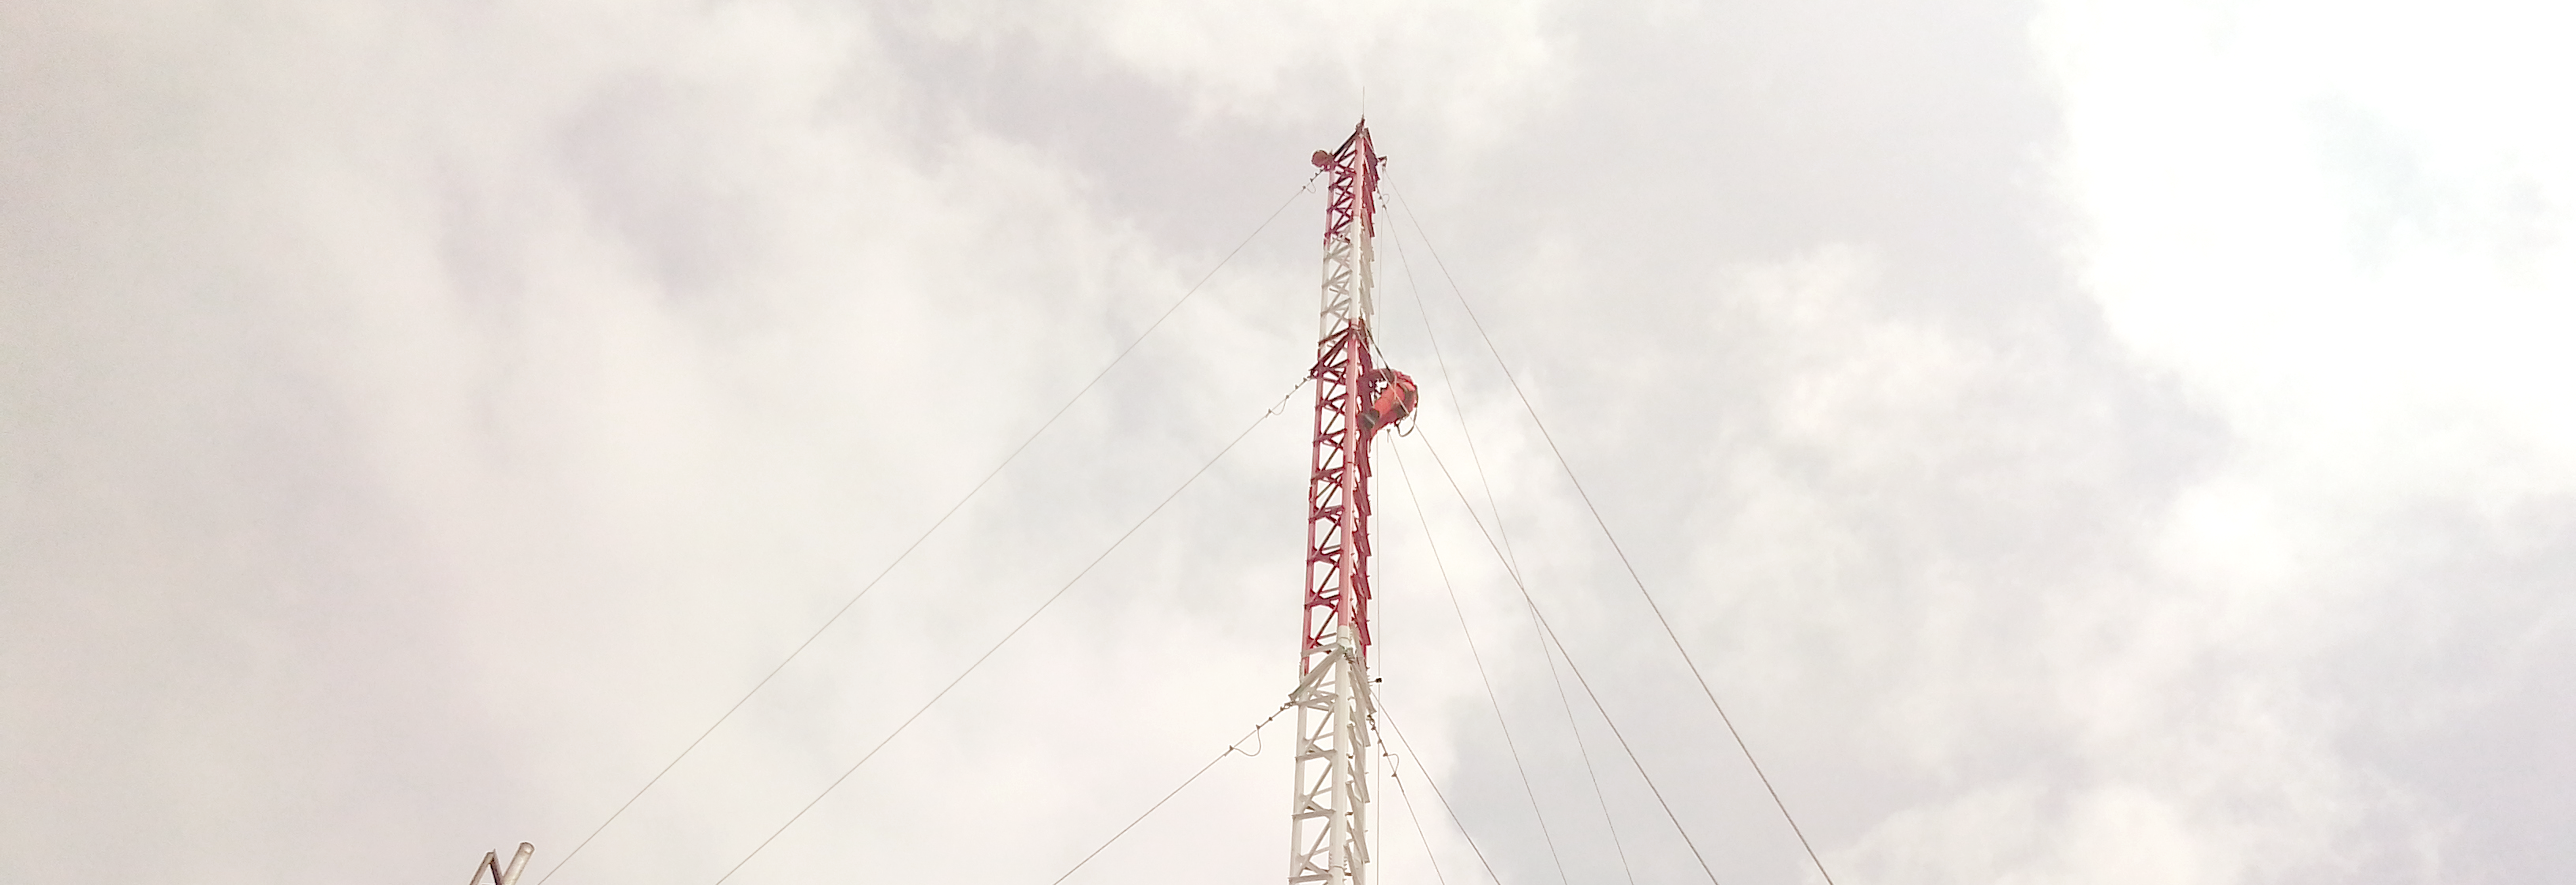 Société Générale Cameroun (SGC) - New Telecom Tower to Boost Multi Agency  Communication